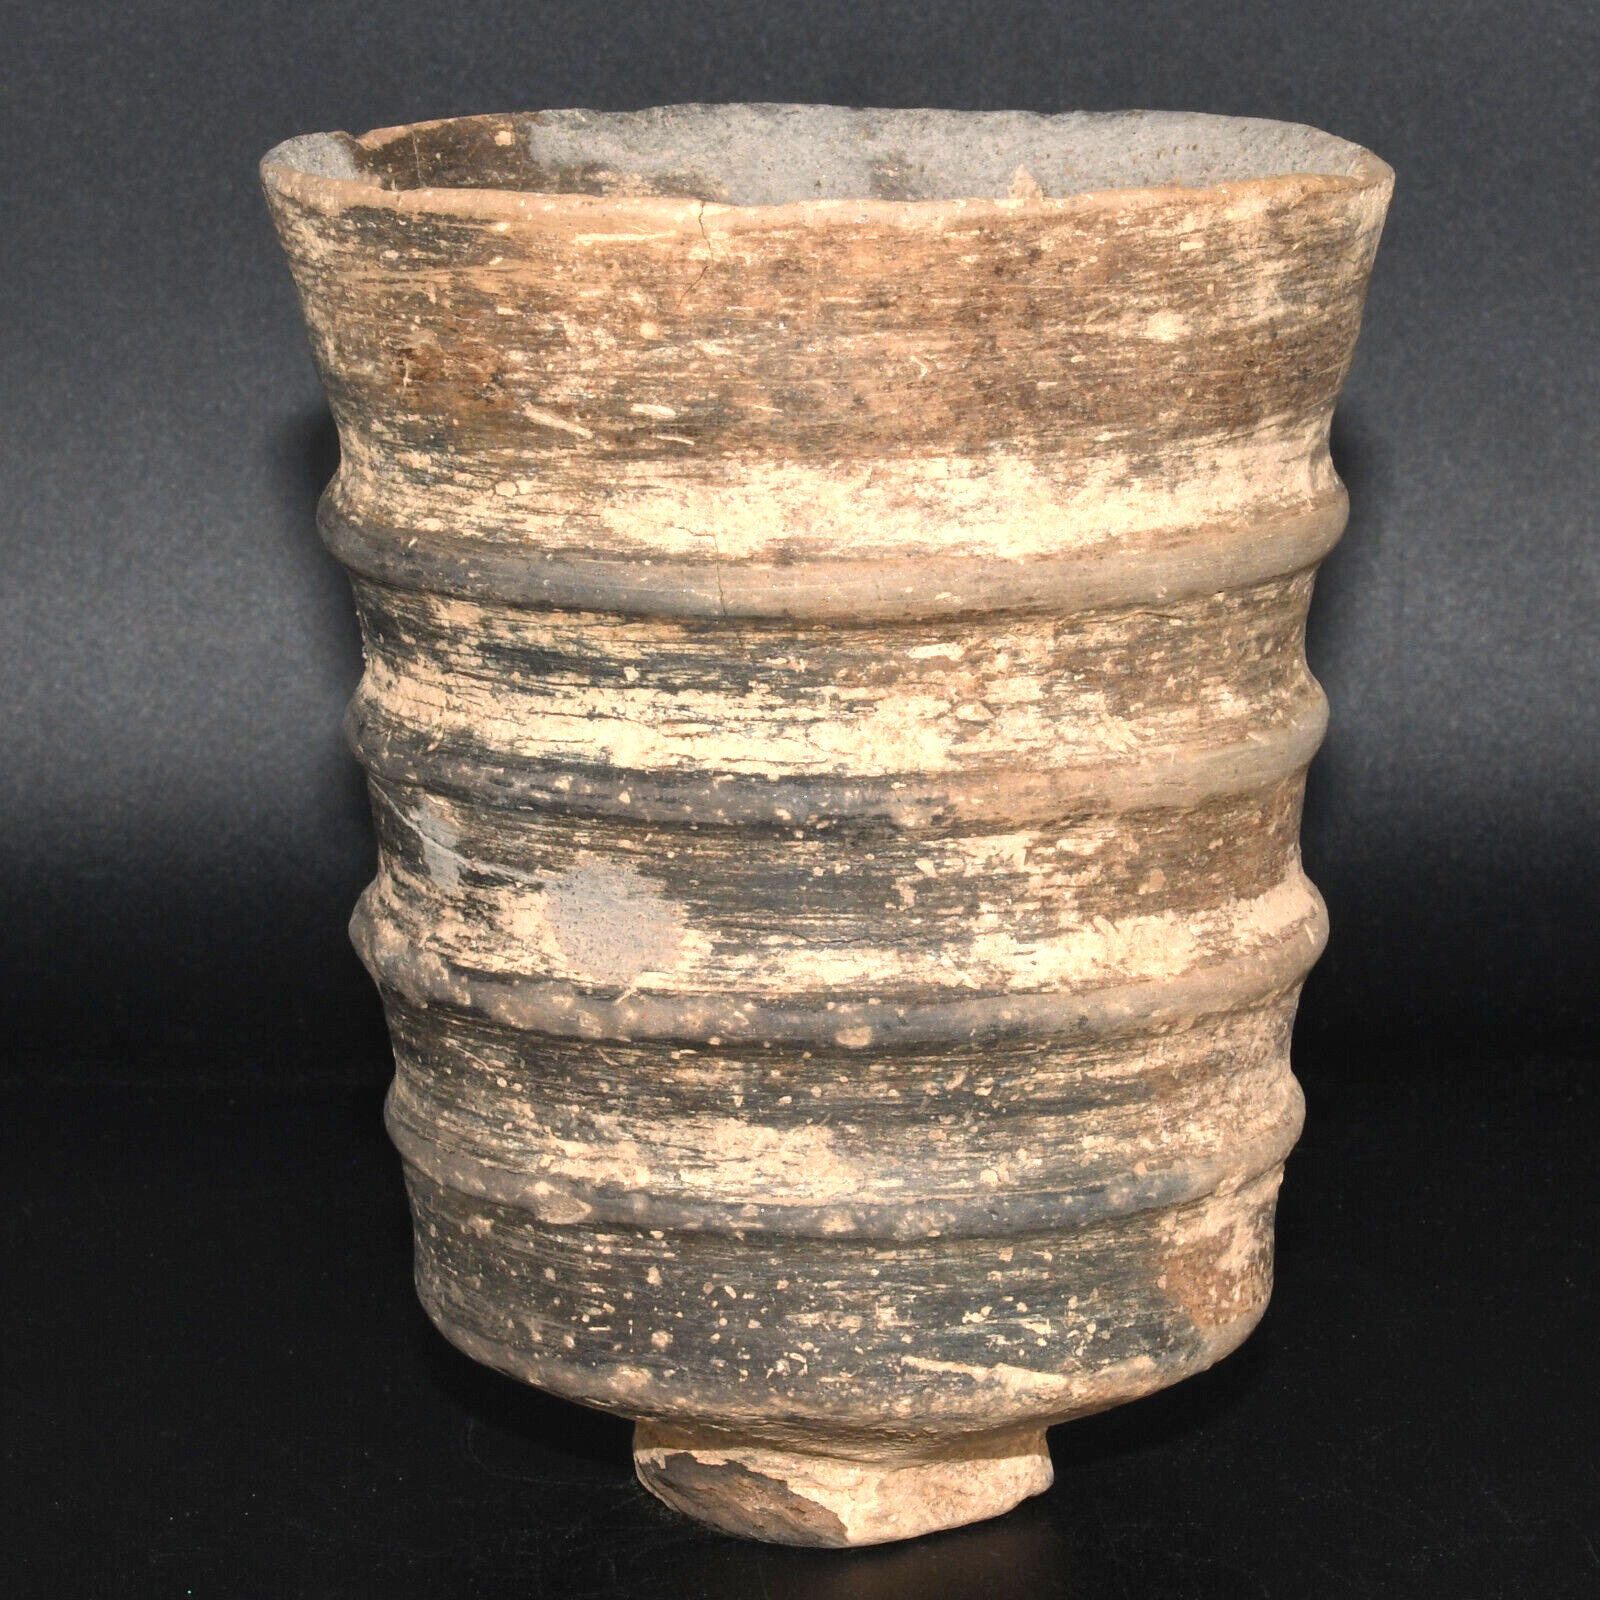 Big Intact Ancient Indus Valley Civilization Terracotta Cup Jar C. 3300 - 2000BC